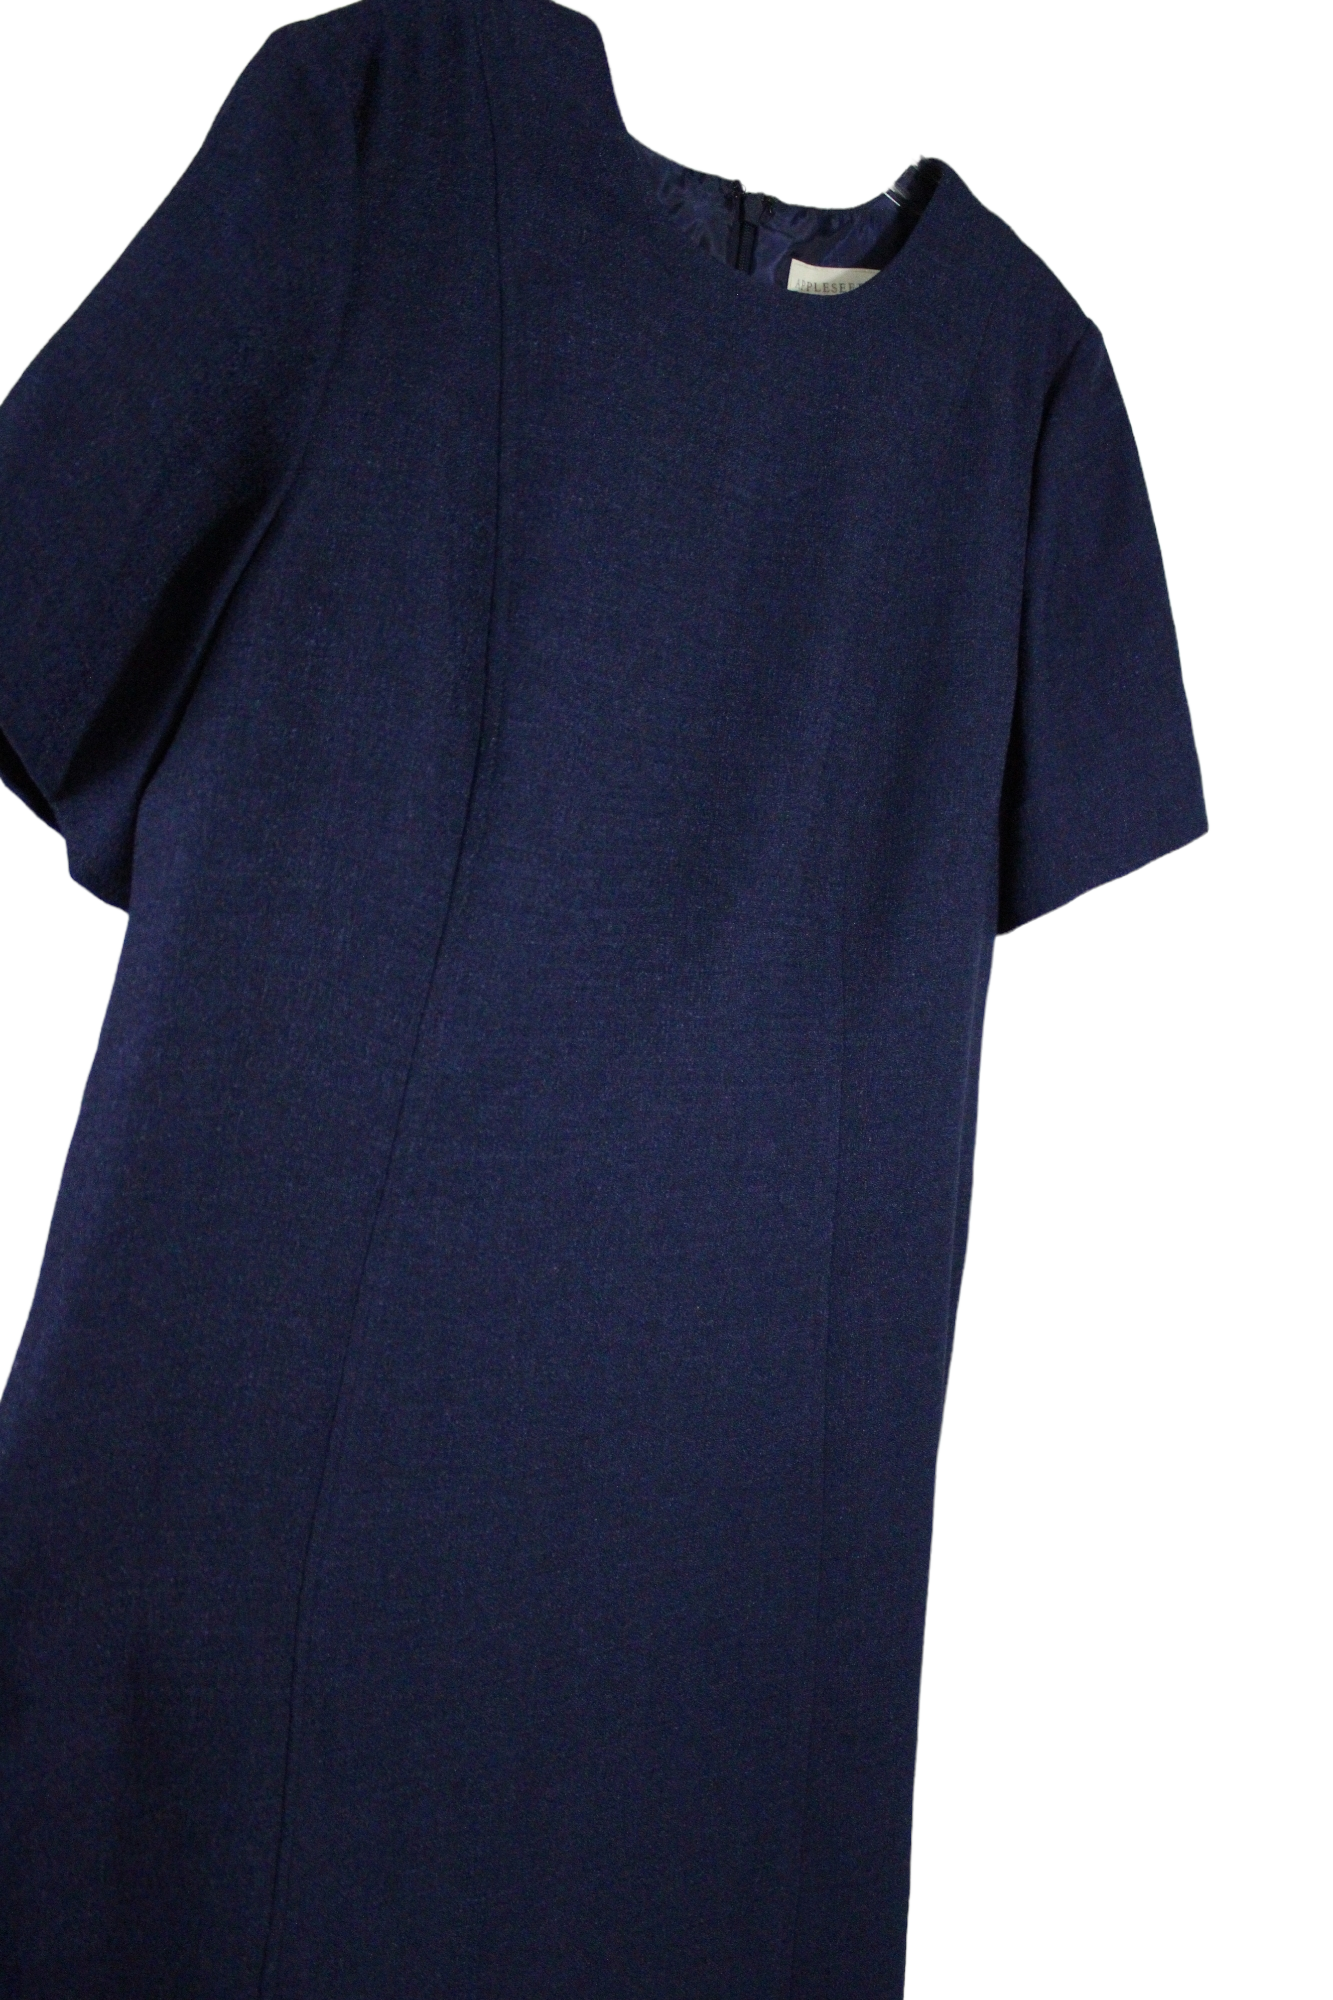 Appleseed's Blue Textured Dress | 14